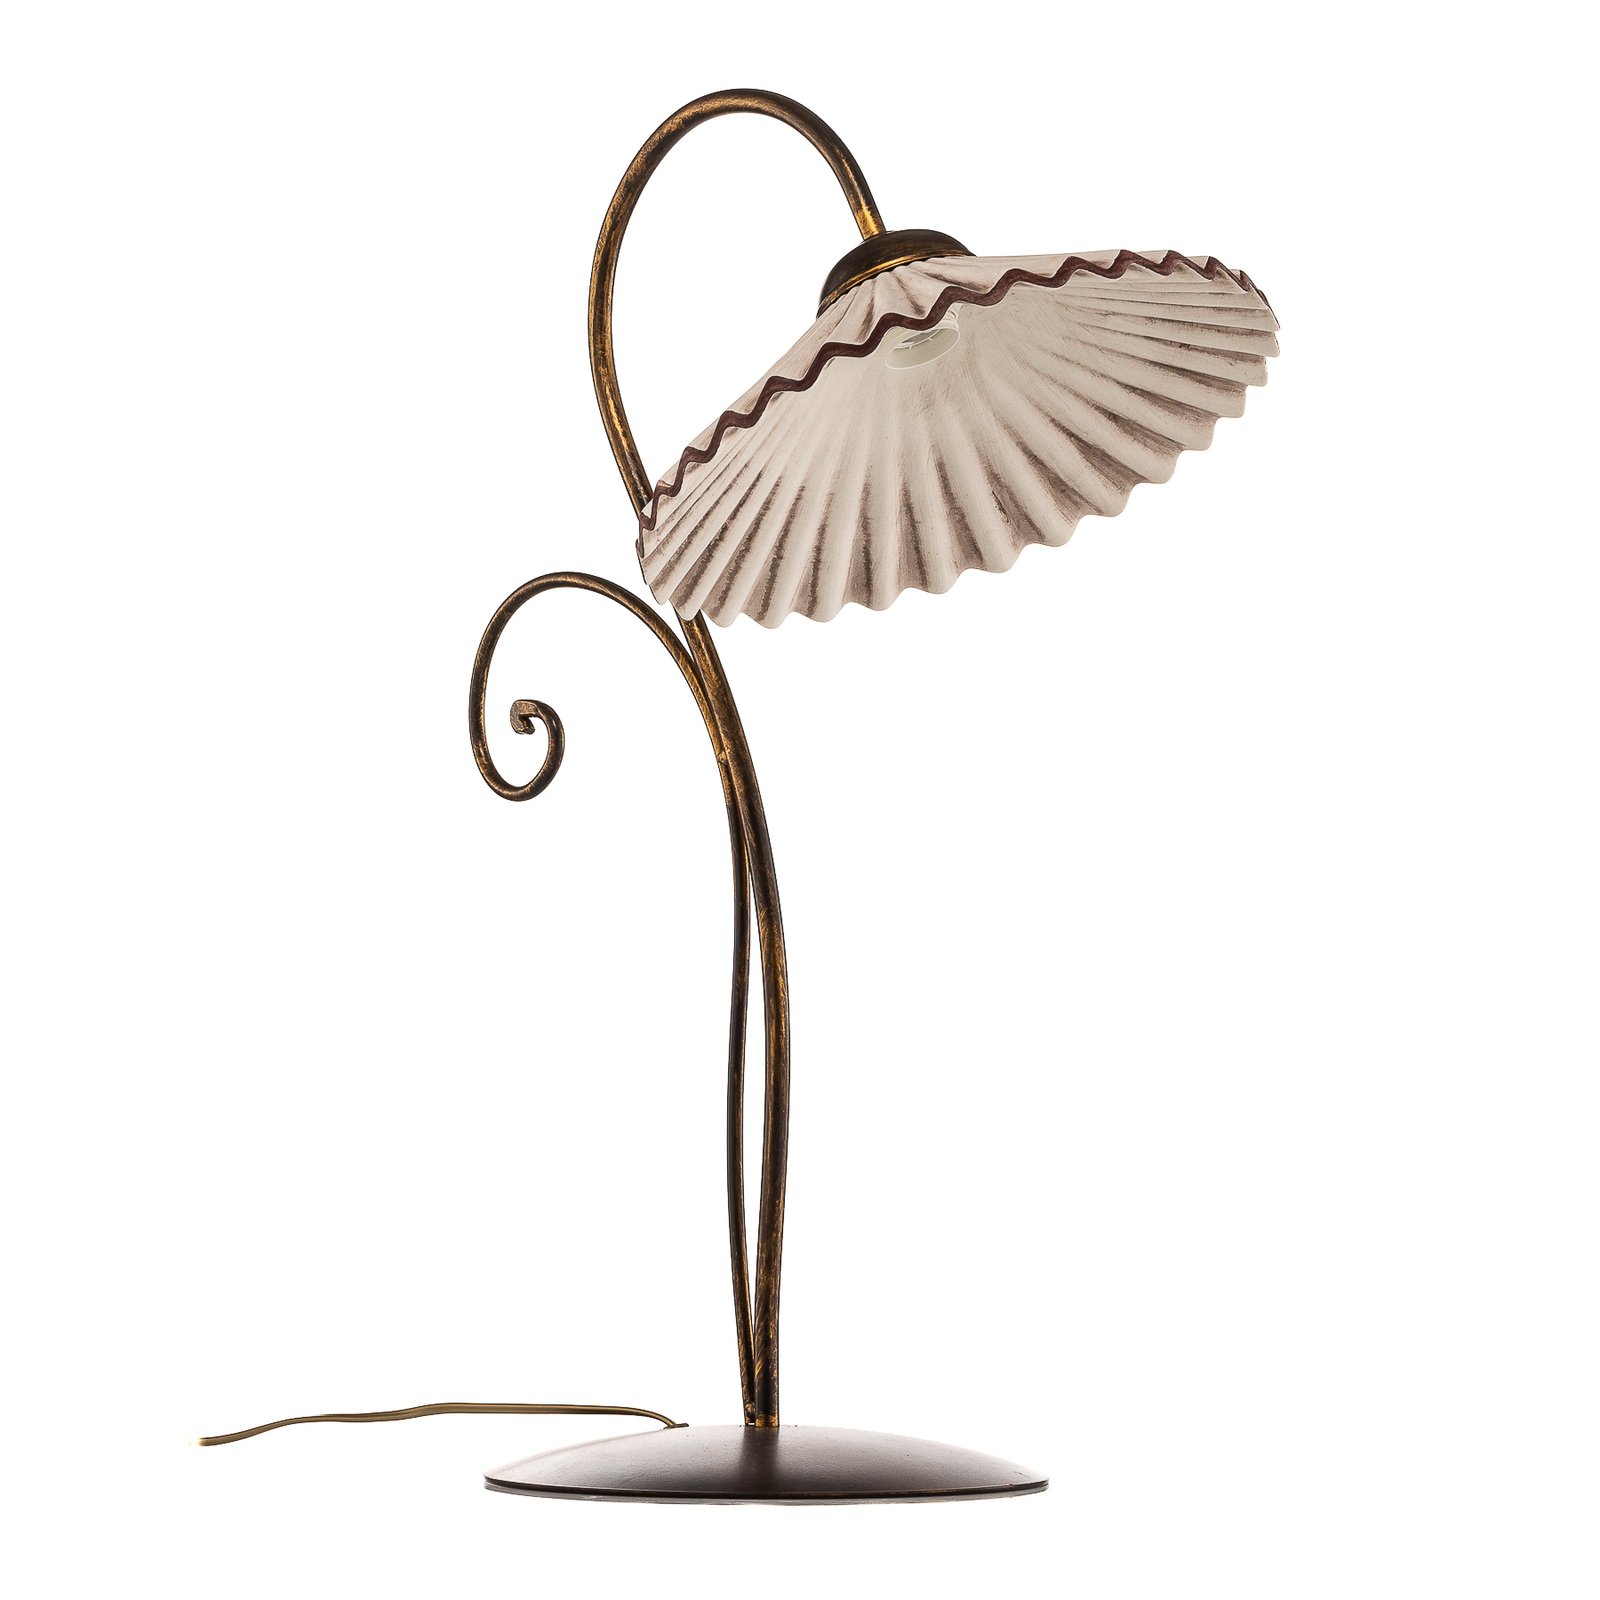 Rosina table lamp in bronze with ceramic lampshade